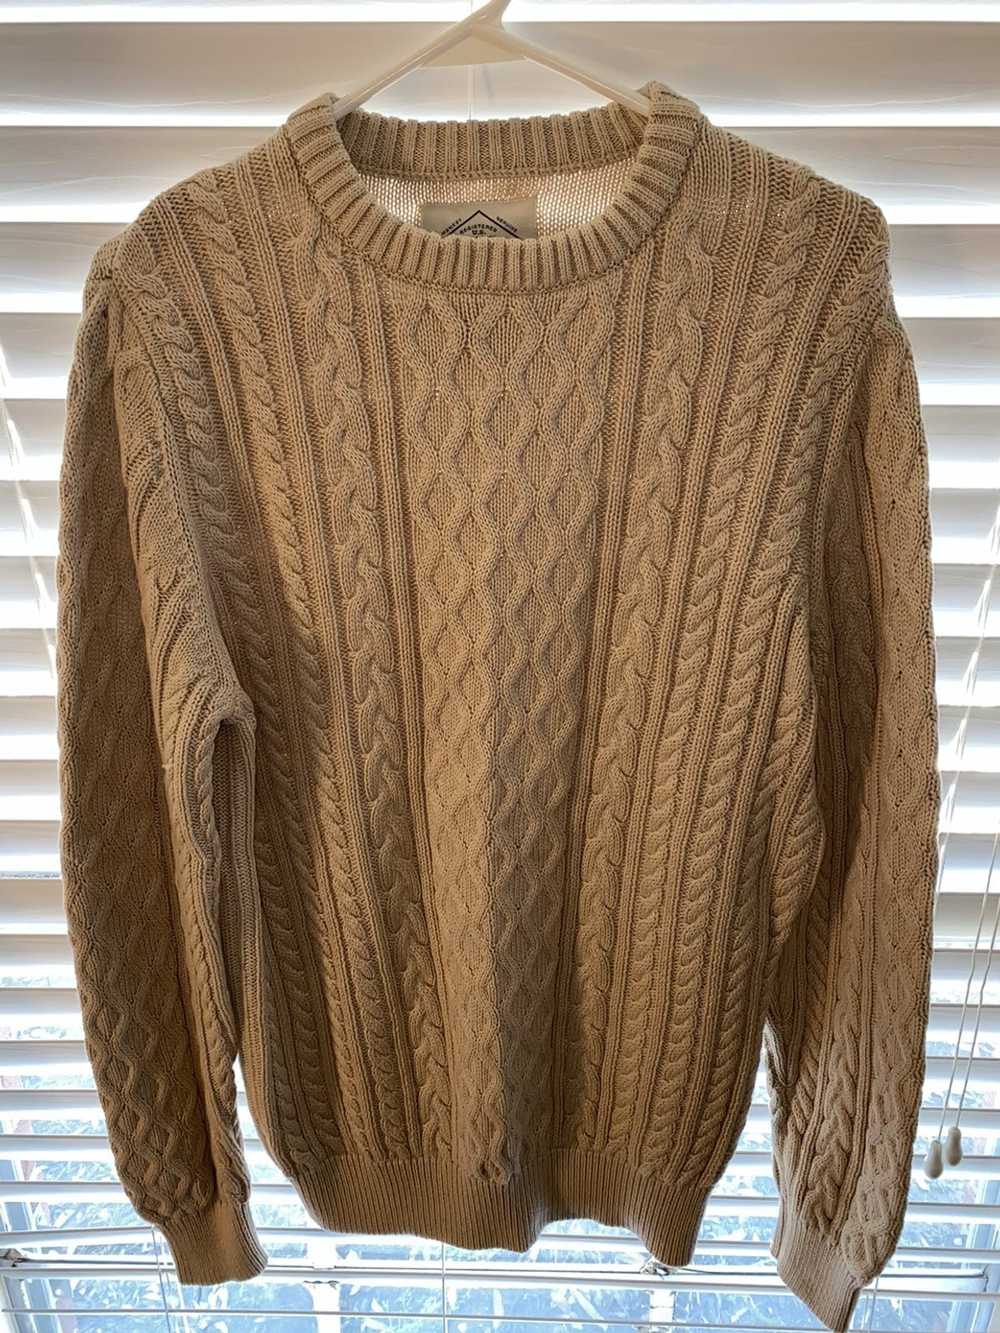 Vintage Cable Knit Sweatshirt - image 1